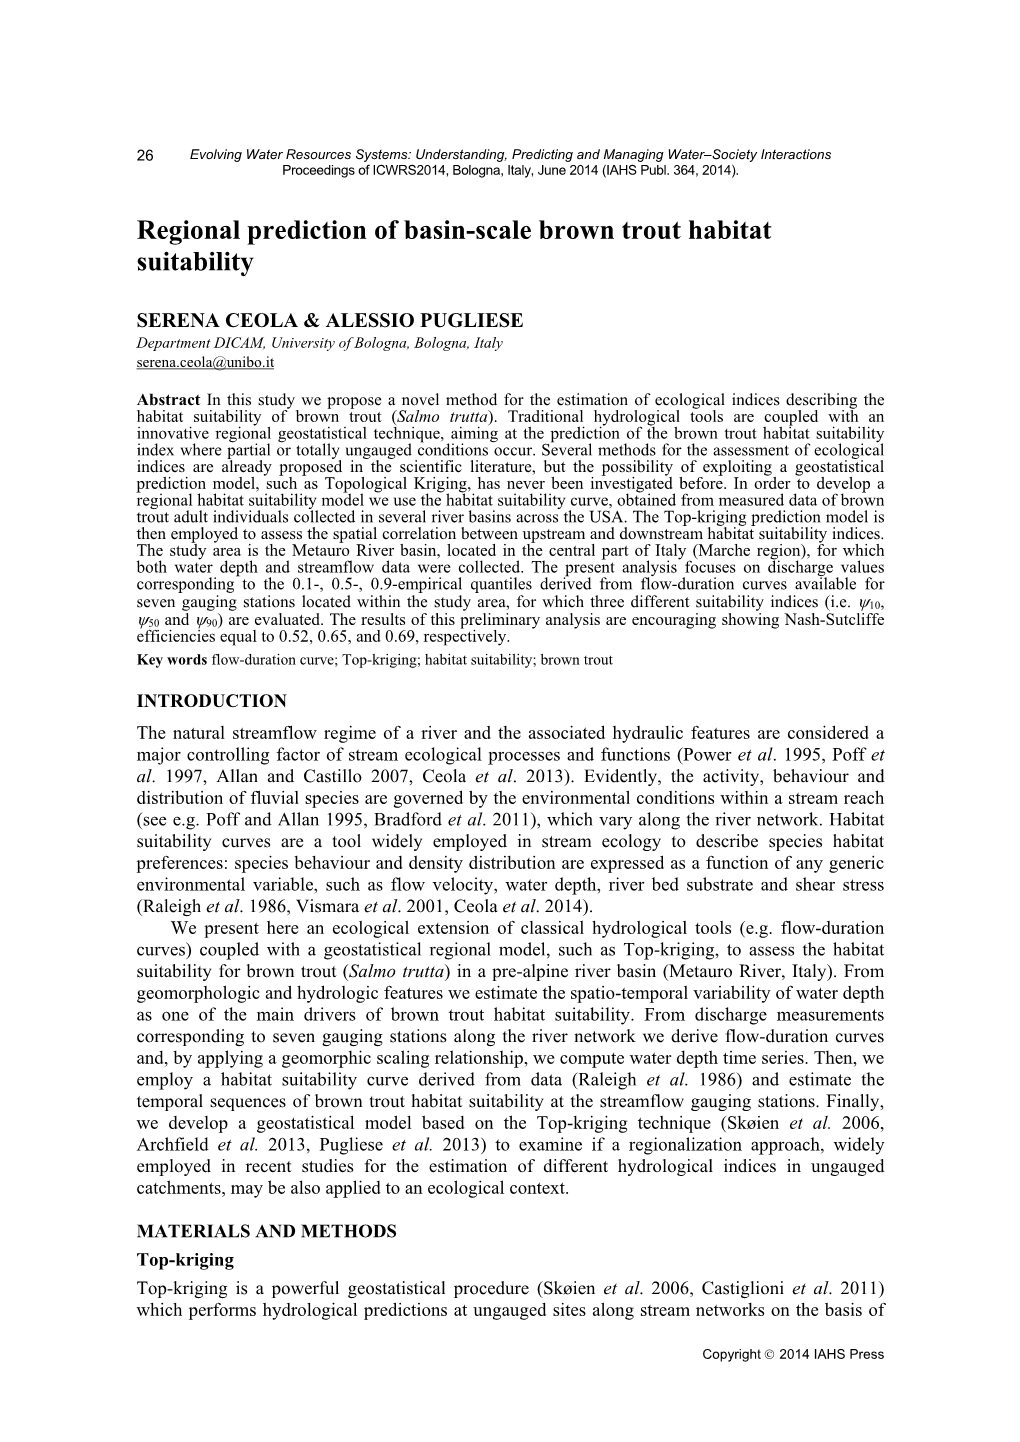 Regional Prediction of Basin-Scale Brown Trout Habitat Suitability